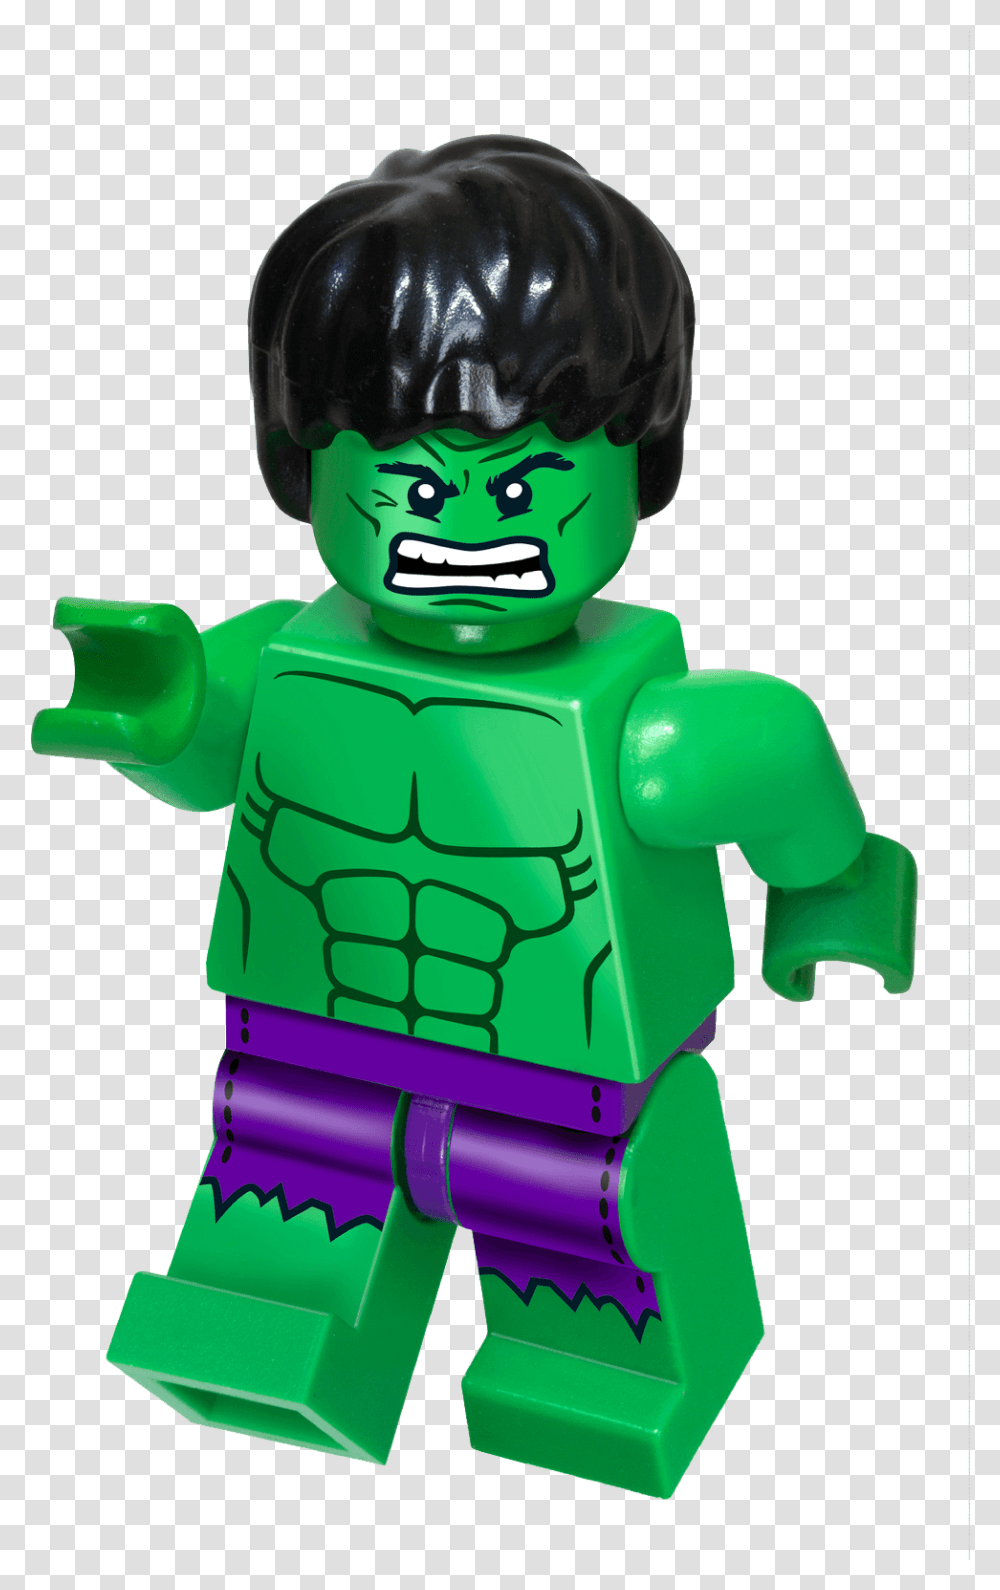 Lego Hulk Clipart Image Lego Hulk Minifigure, Toy, Robot, Green Transparent Png